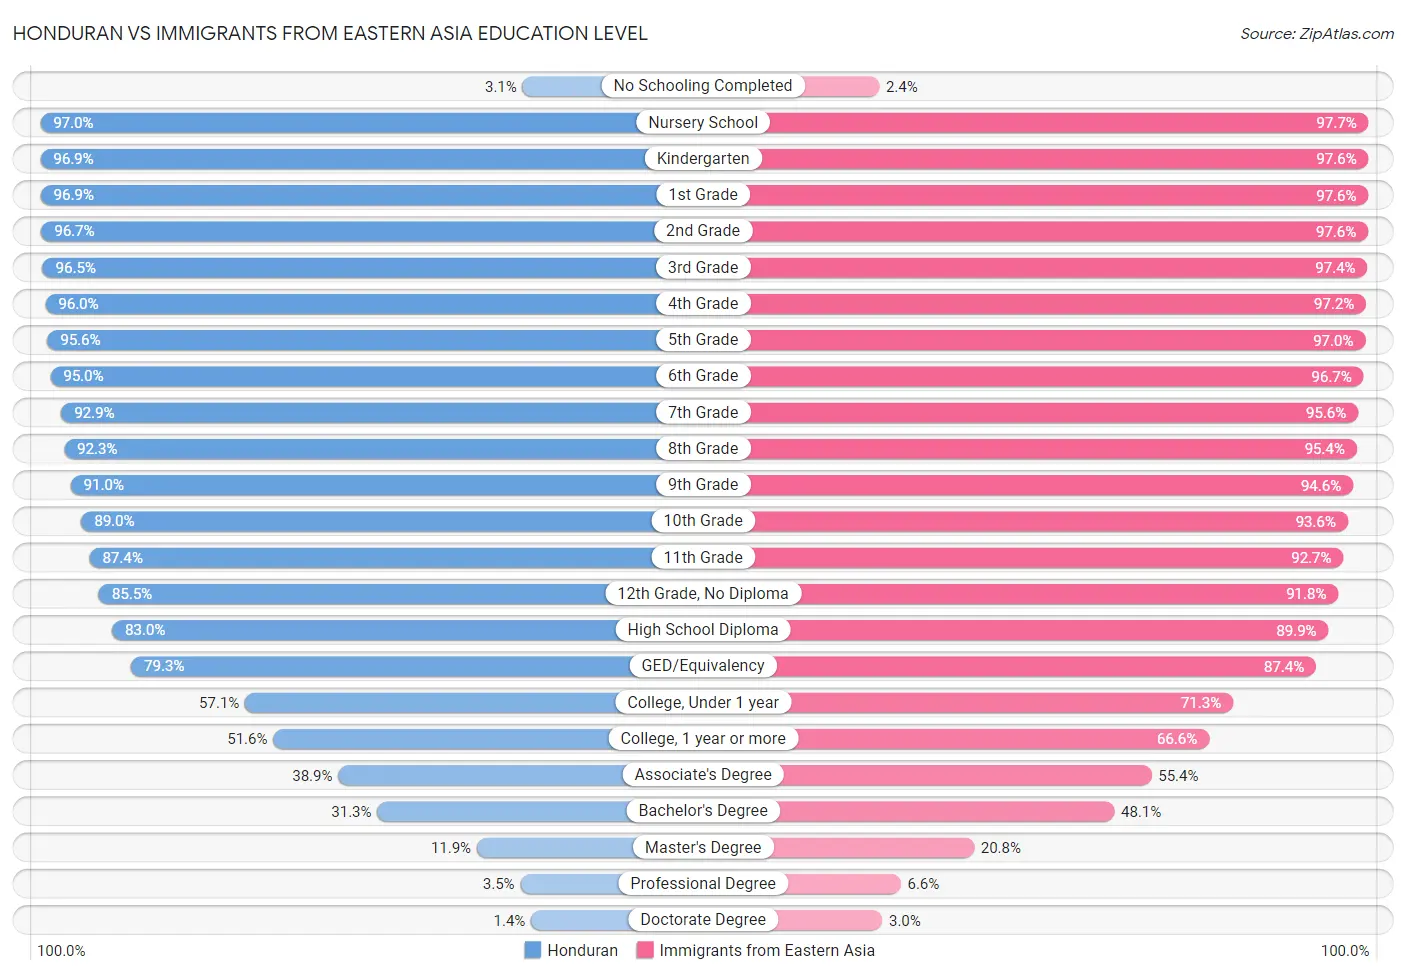 Honduran vs Immigrants from Eastern Asia Education Level